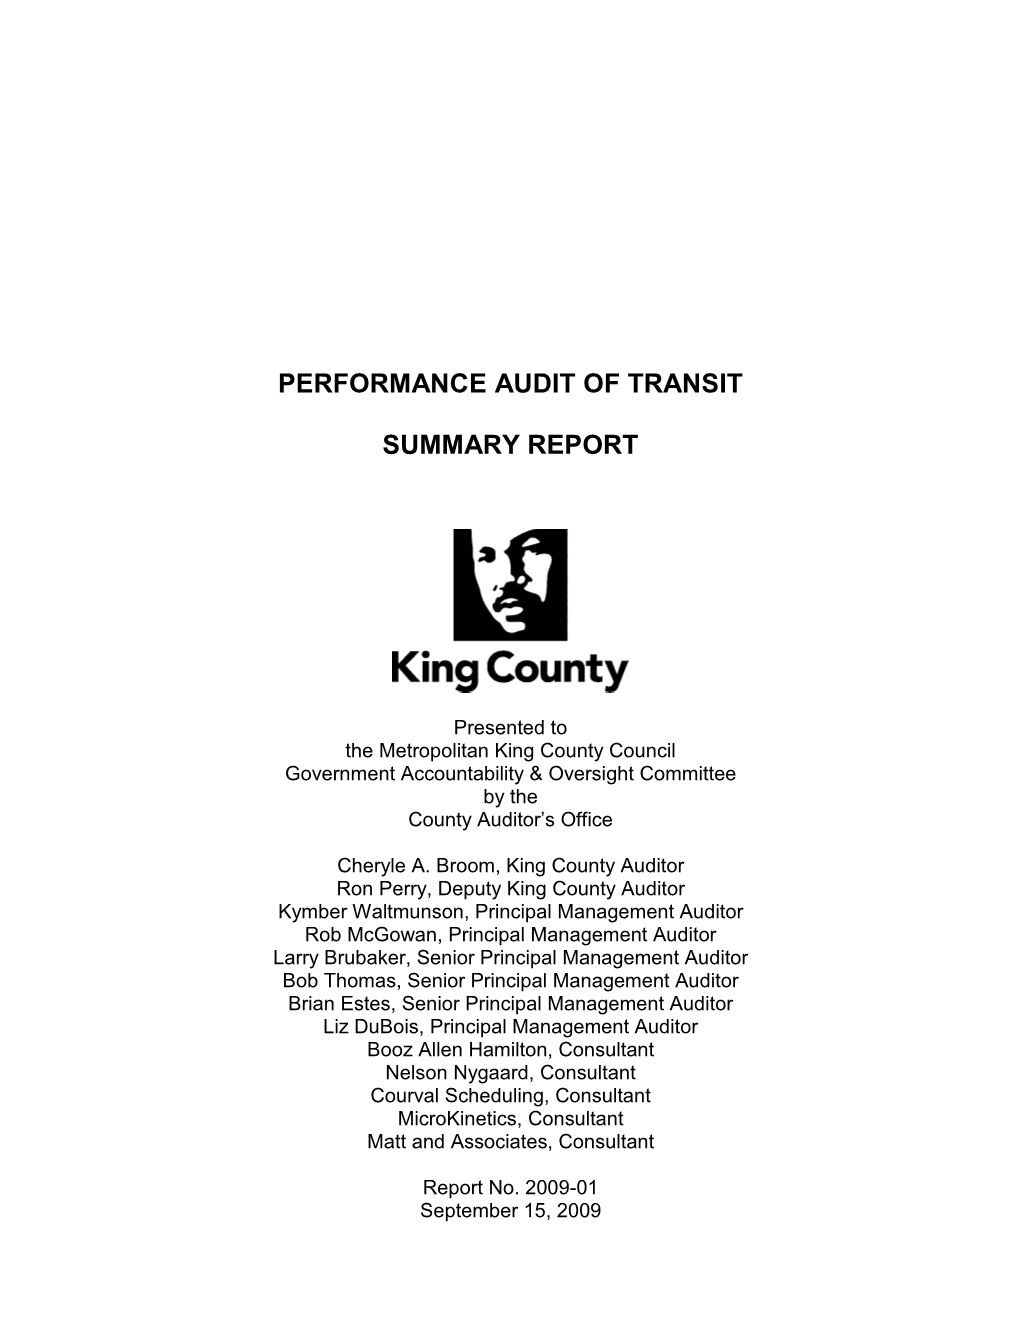 Performance Audit of Transit